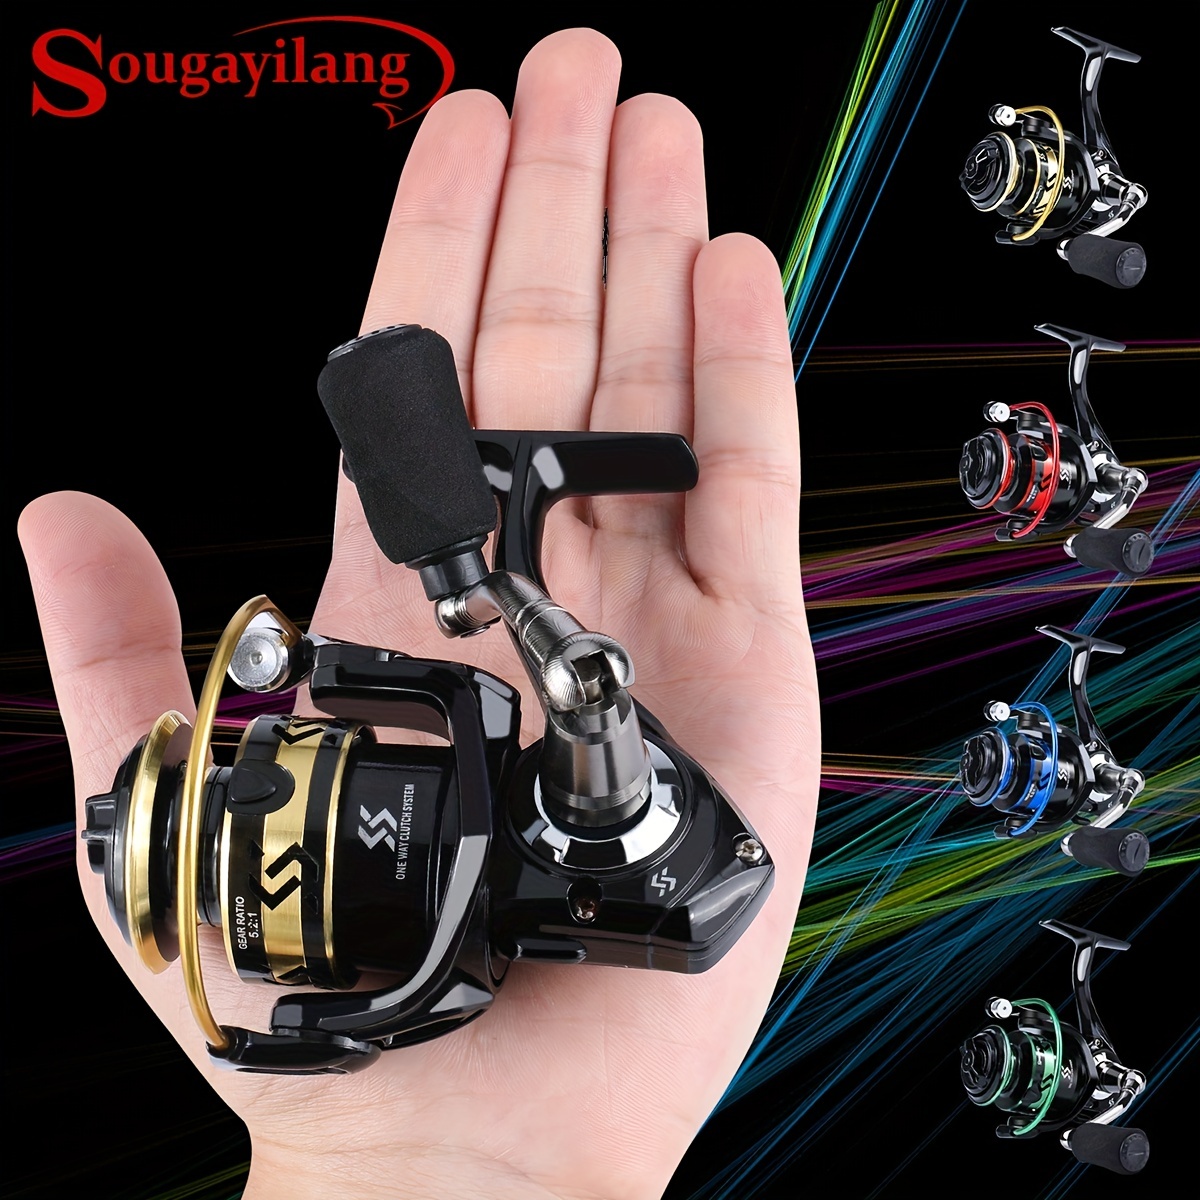 New Sougayilang Spinning Fishing Reel 1000-4000 Series 5.2:1 Gear